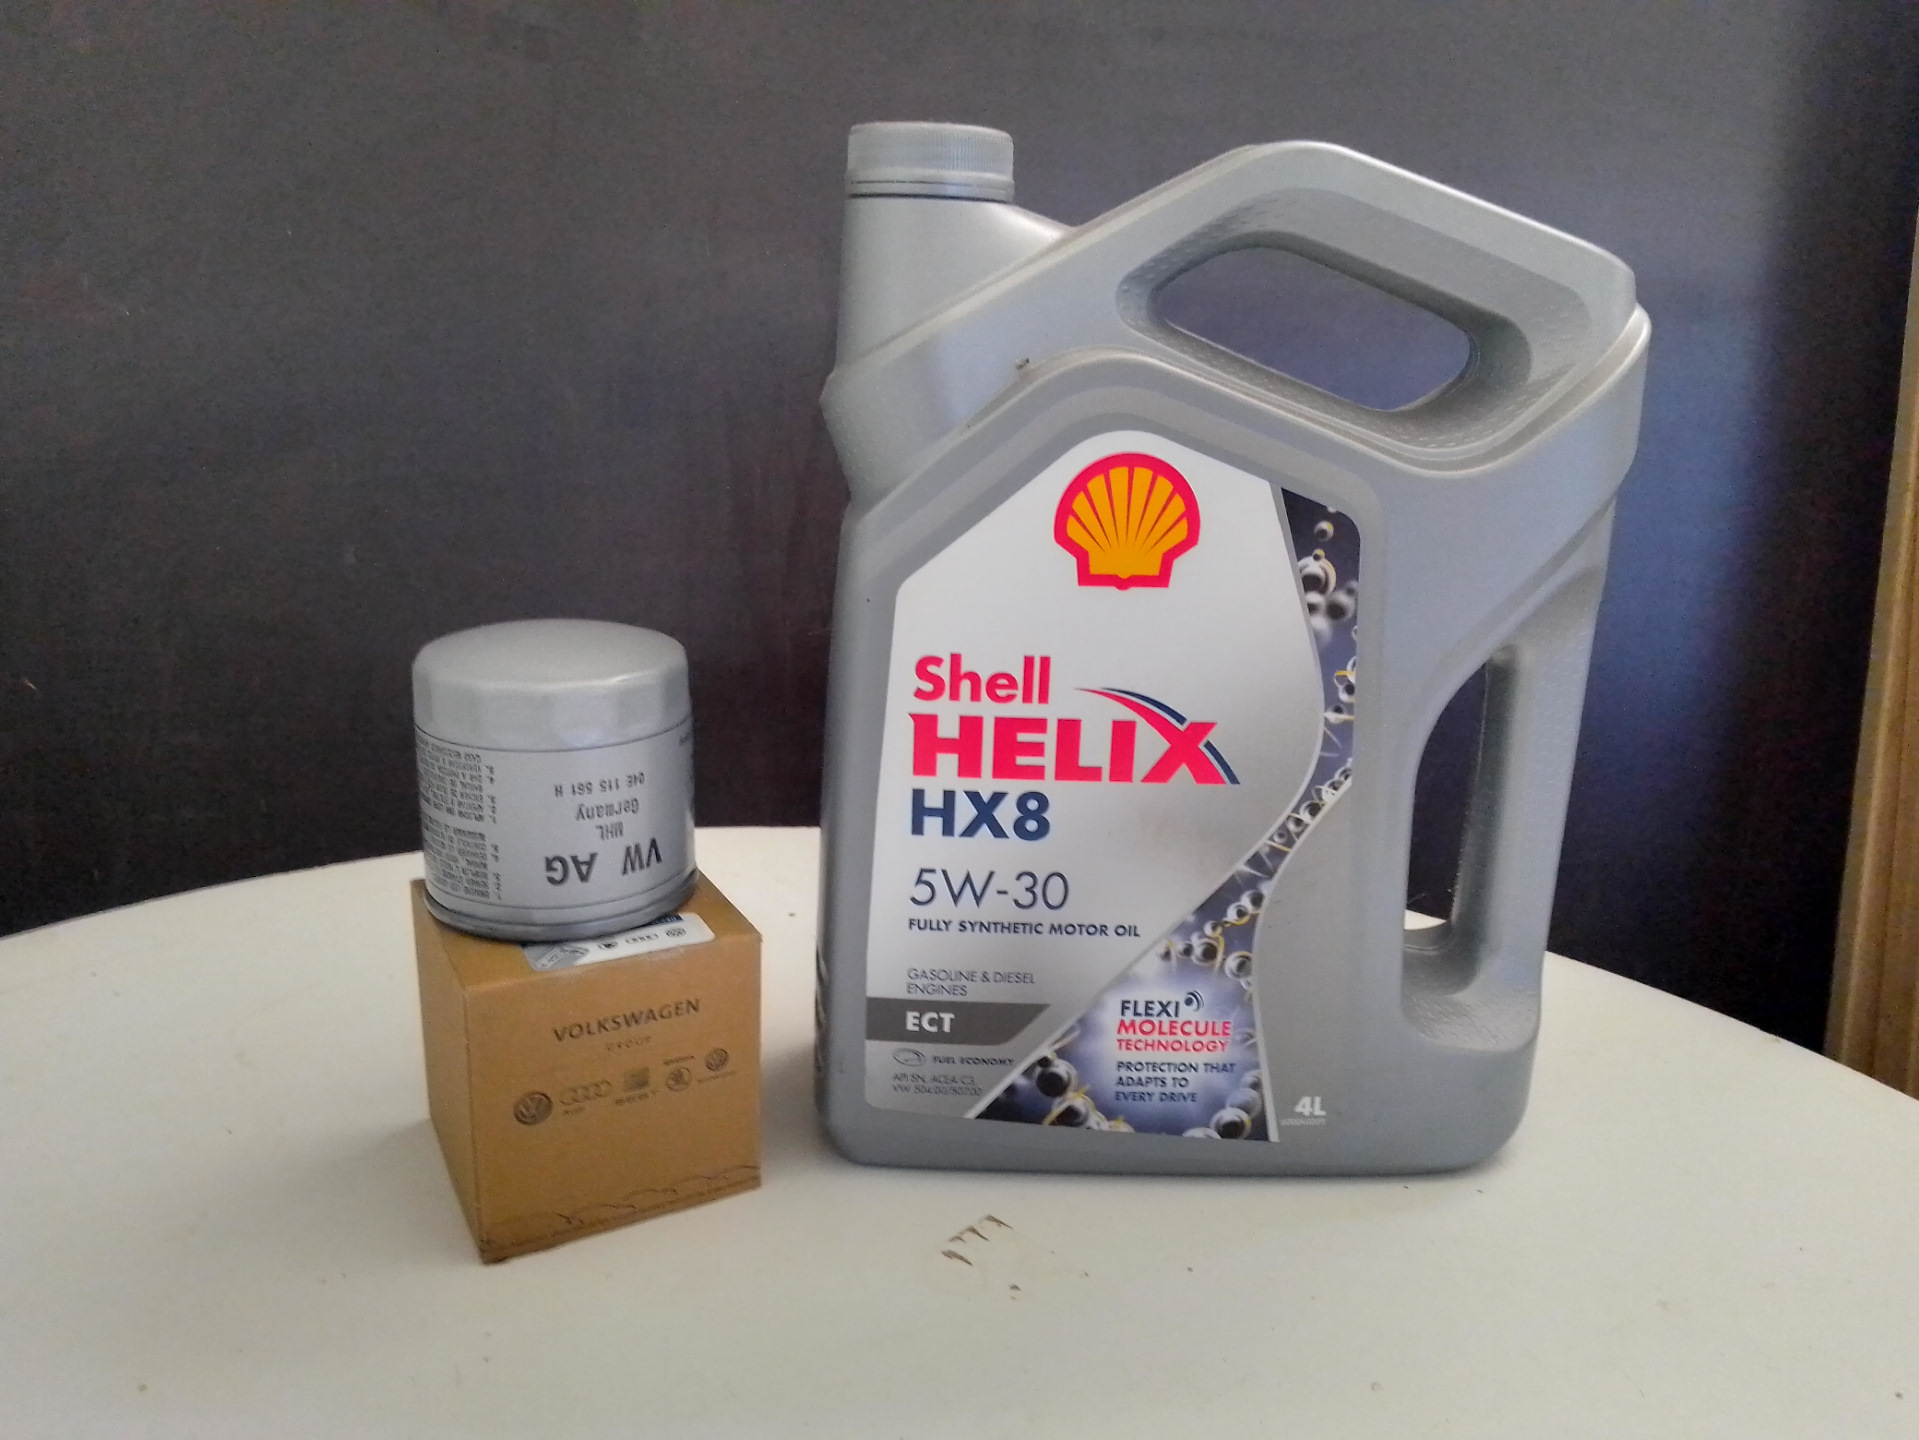 Поло лифтбек какое масло. Shell hx8 5w30 ect. Shell Helix hx8 ect 5w-30. Какое масло надо заливать в Фольксваген поло лифтбек.